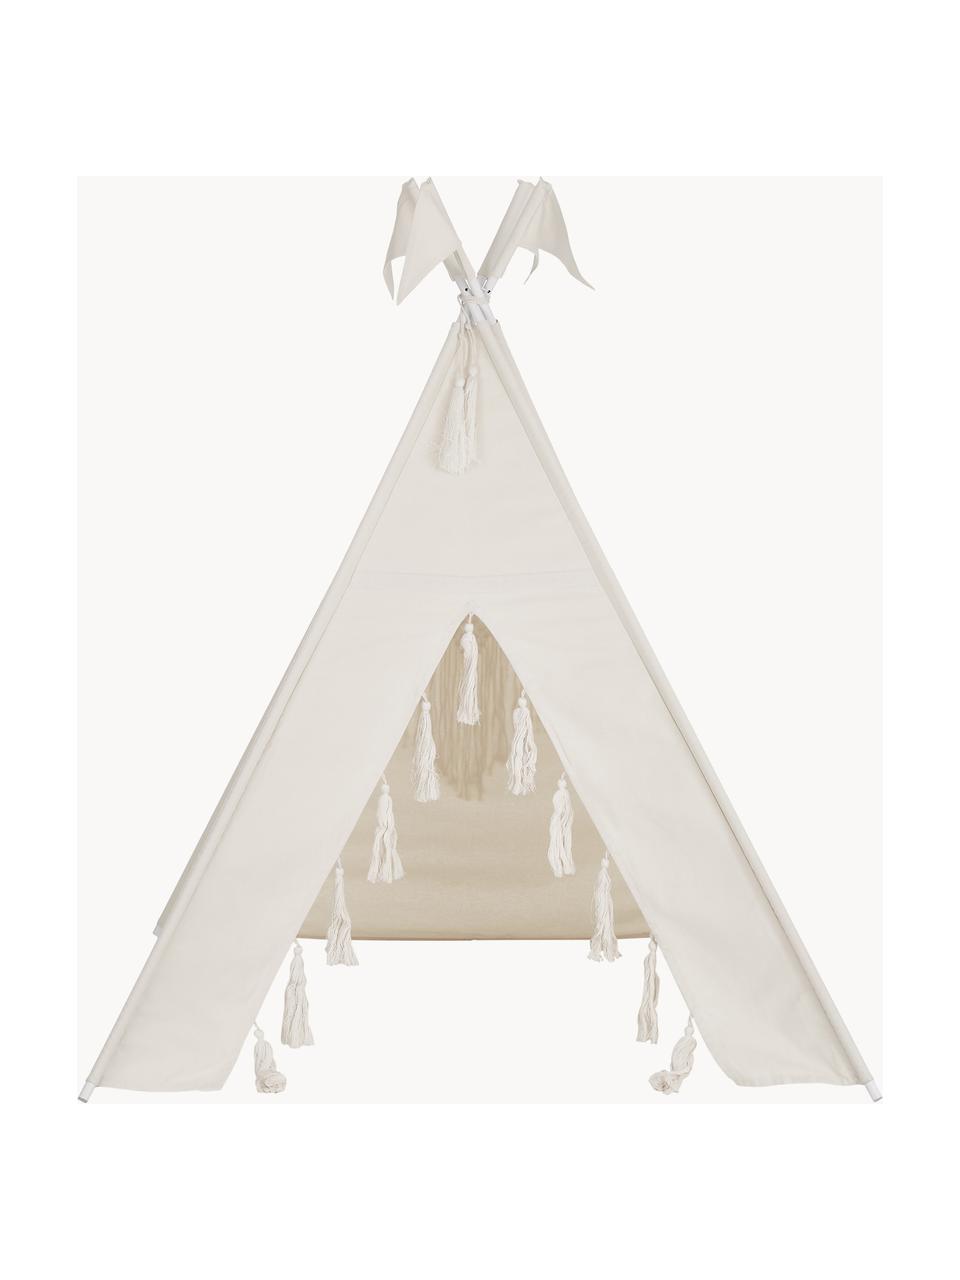 Tenda per bambini Lagos, Cotone, metallo, Beige chiaro, Larg. 110 x Alt. 140 cm